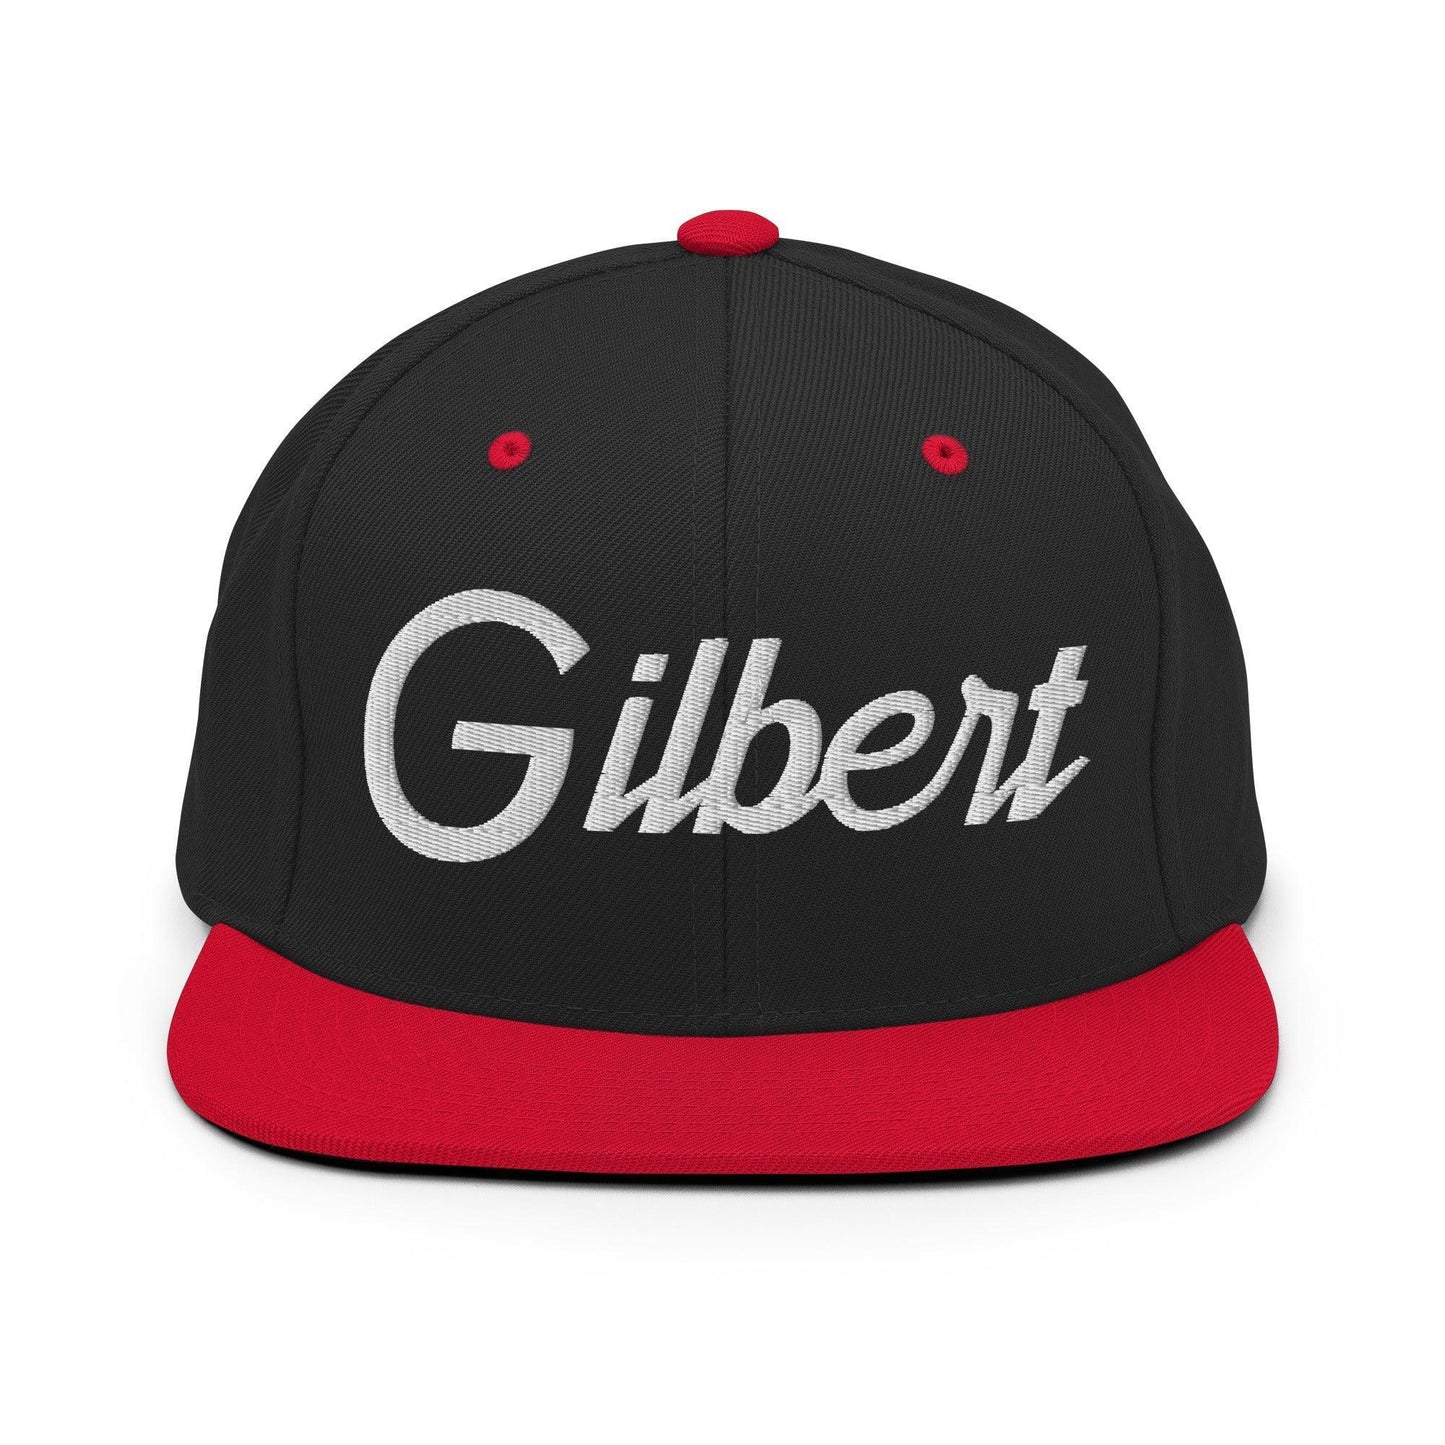 Gilbert Script Snapback Hat Black Red